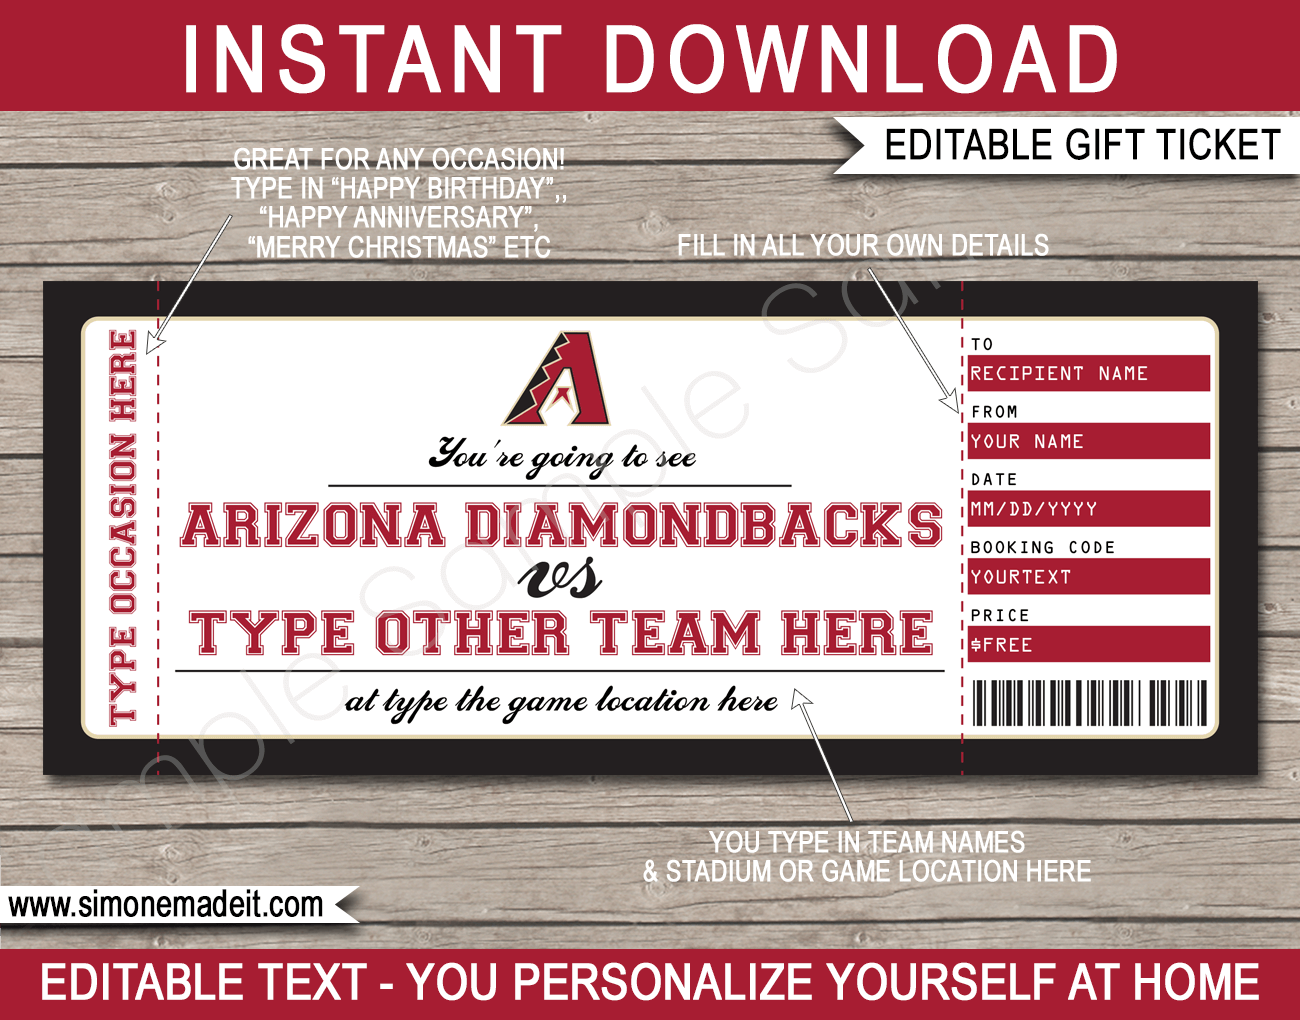 MLB - Arizona Diamondbacks: Two Club Reserve Tickets, eVoucher